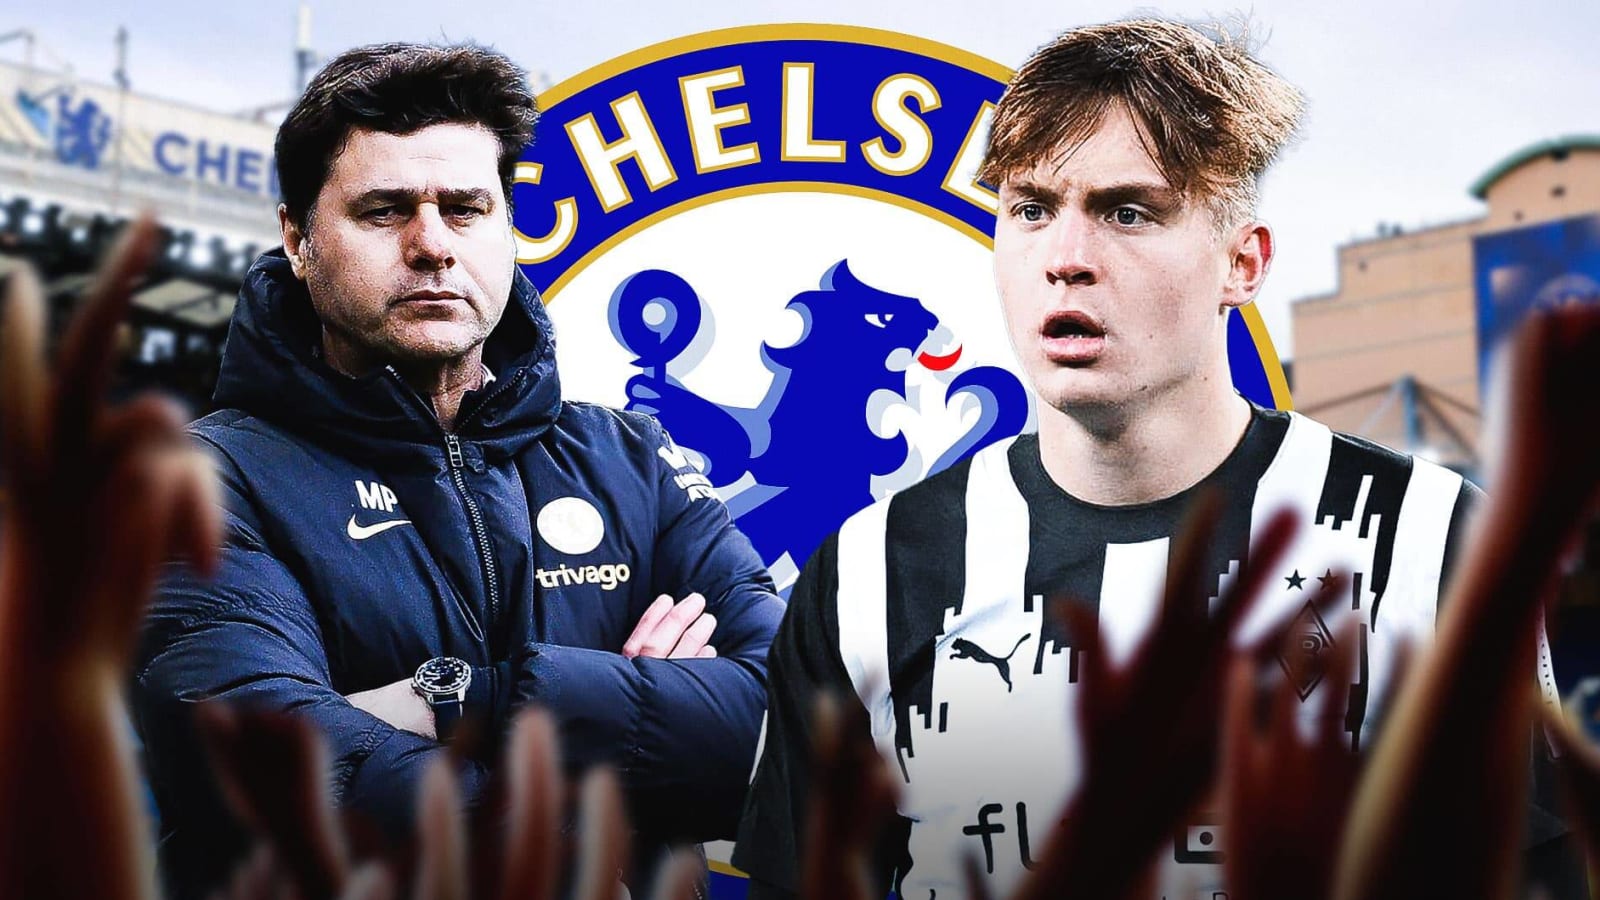 How Luca Netz fits into Chelsea’s transfer plans?